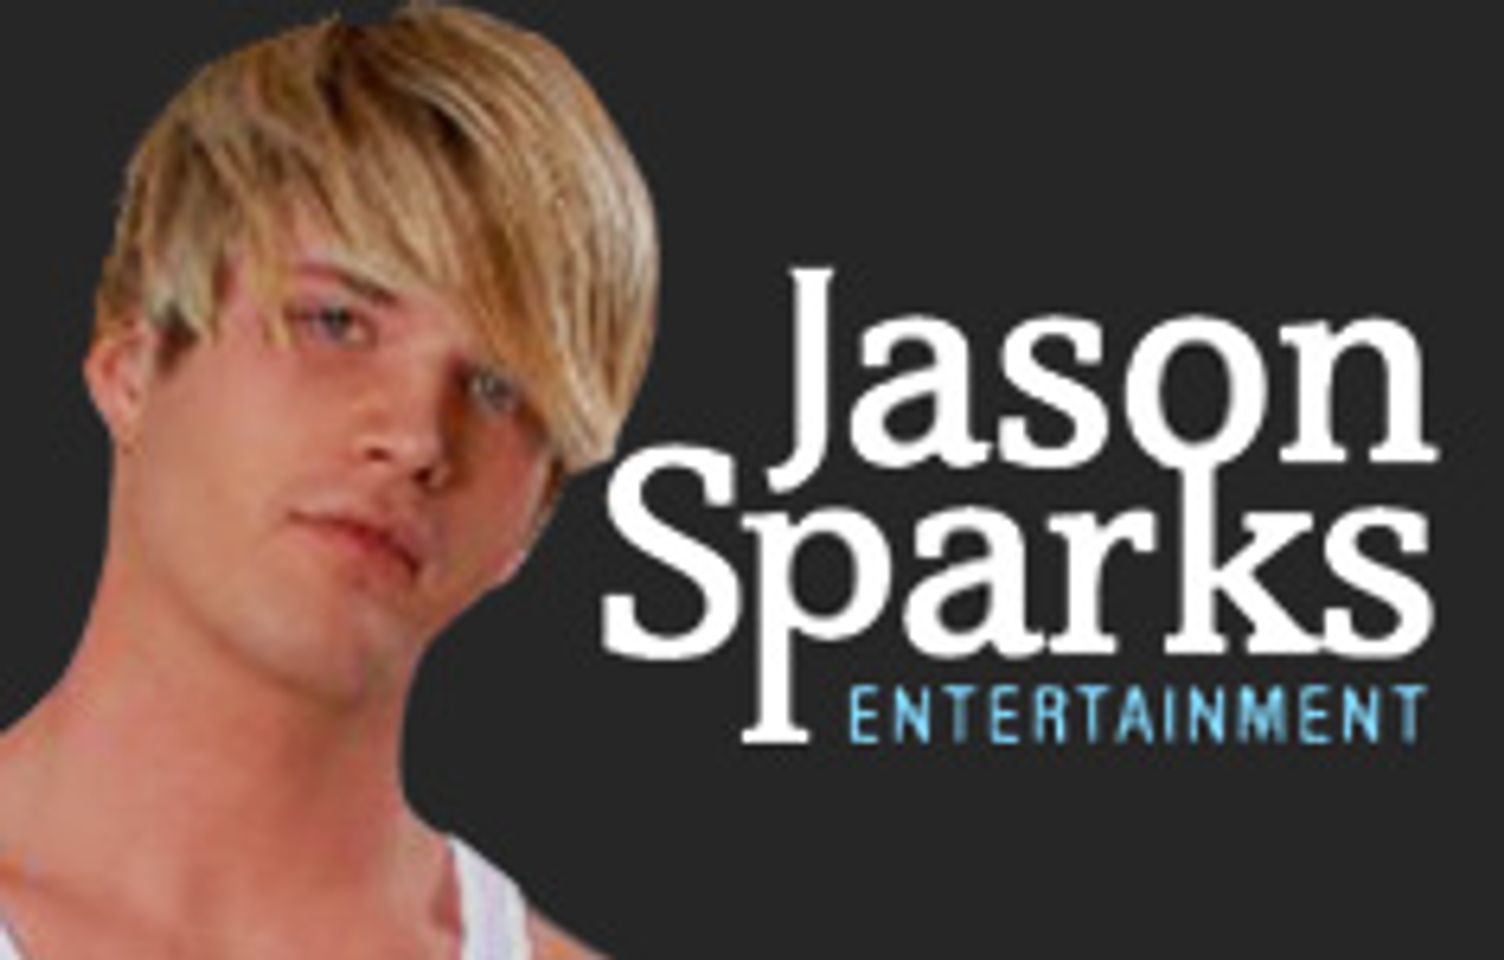 Club Jason Sparks Goes Mobile